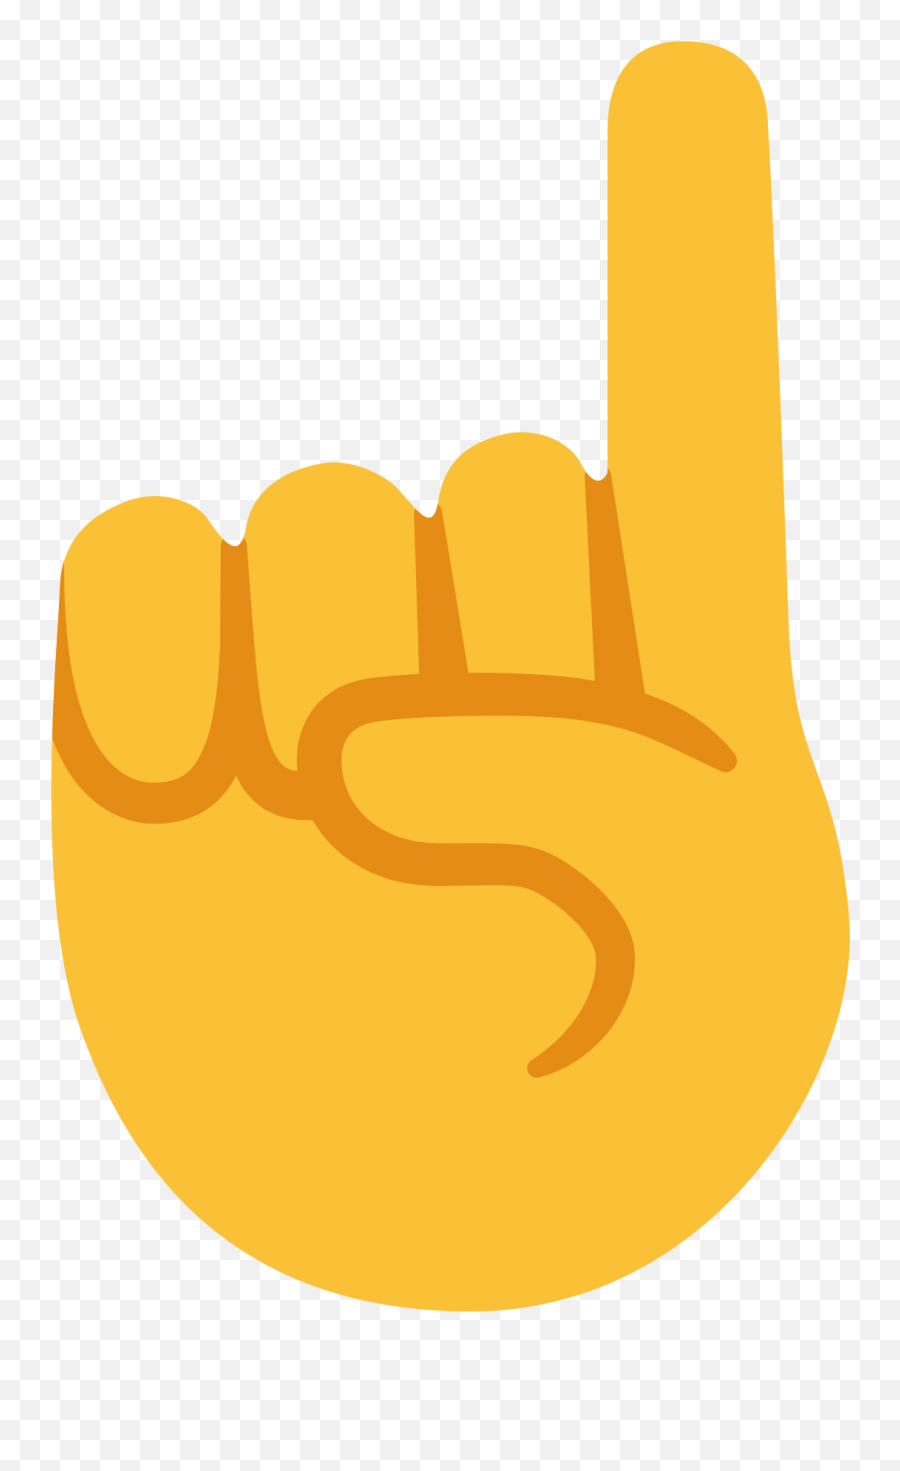 Moon Emoji Png - Good Clipart Thumbs Up Emoji Finger Up Index Pointing Up Emoji Transparent,Thumbs Up Emoji Png